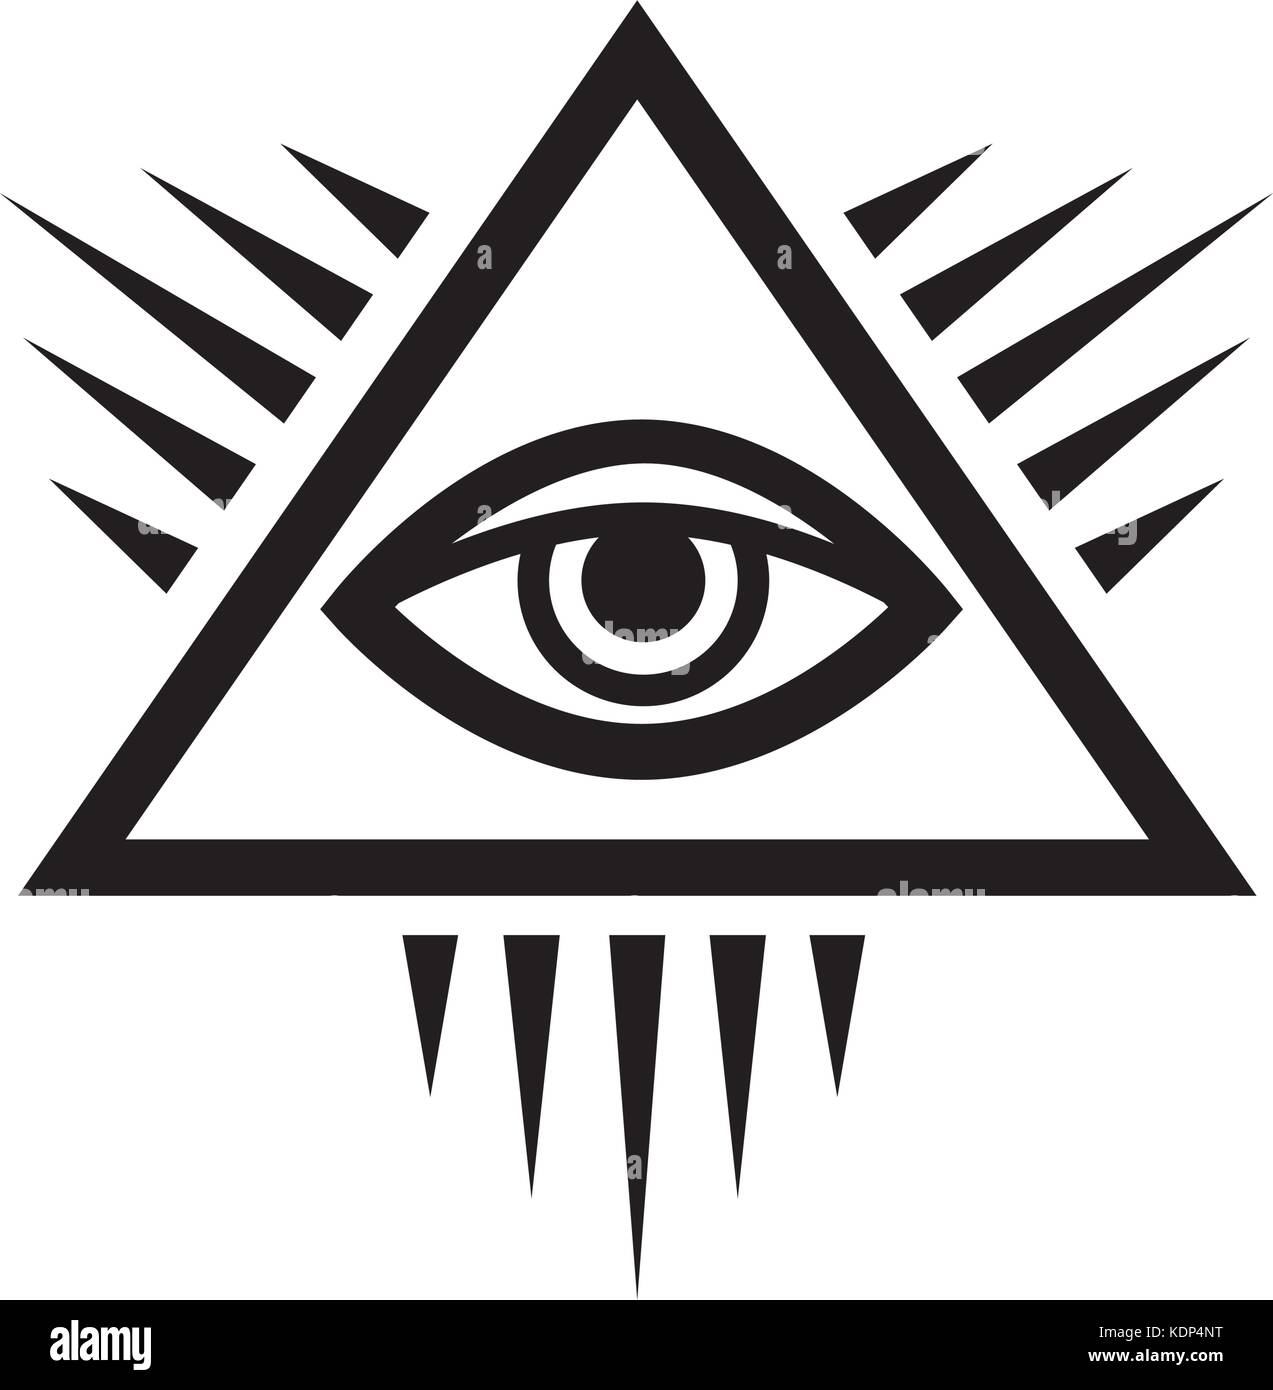 All-Seeing Eye of God (The Eye of Providence | Eye of Omniscience | Luminous Delta). Ancient Mystical Sacral Symbol of Illuminati and Freemasonry. Stock Vector